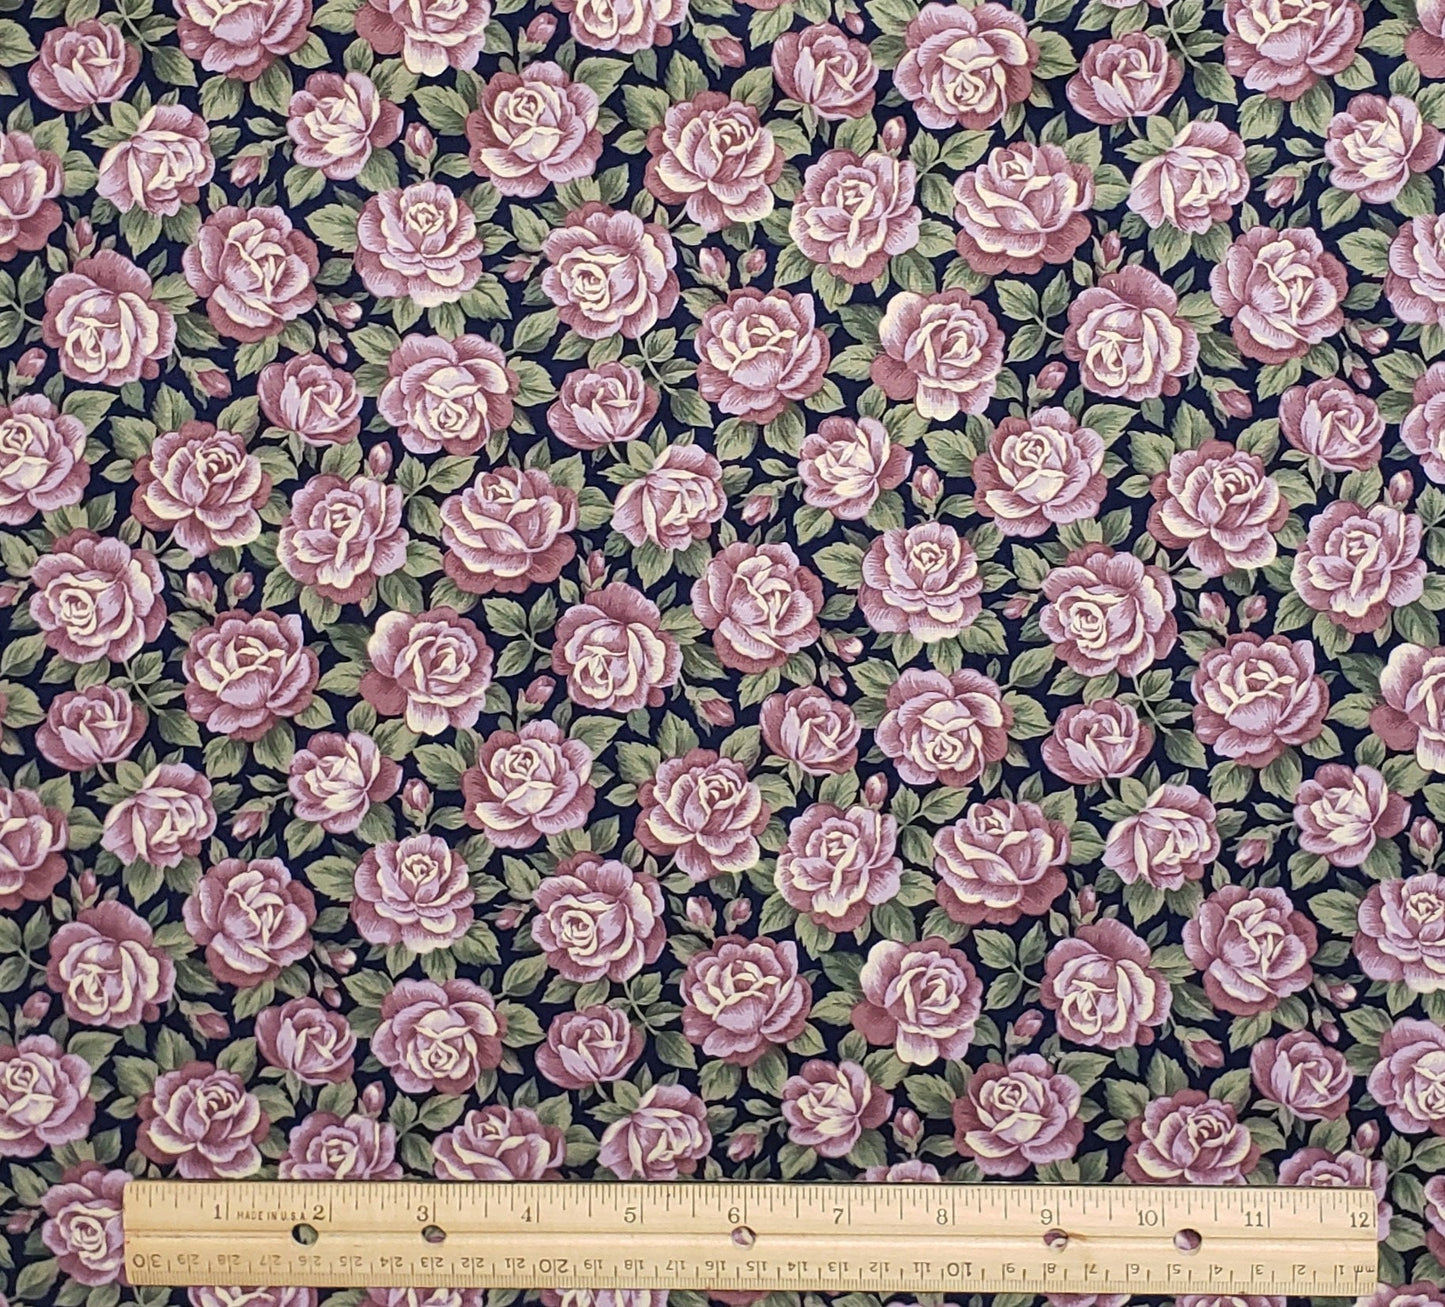 COLORSHOP by VIP Cranston Print Works Company - Dark Blue Fabric / Lavender, Mauve and Cream Rose Print / Tonal Green Leaves